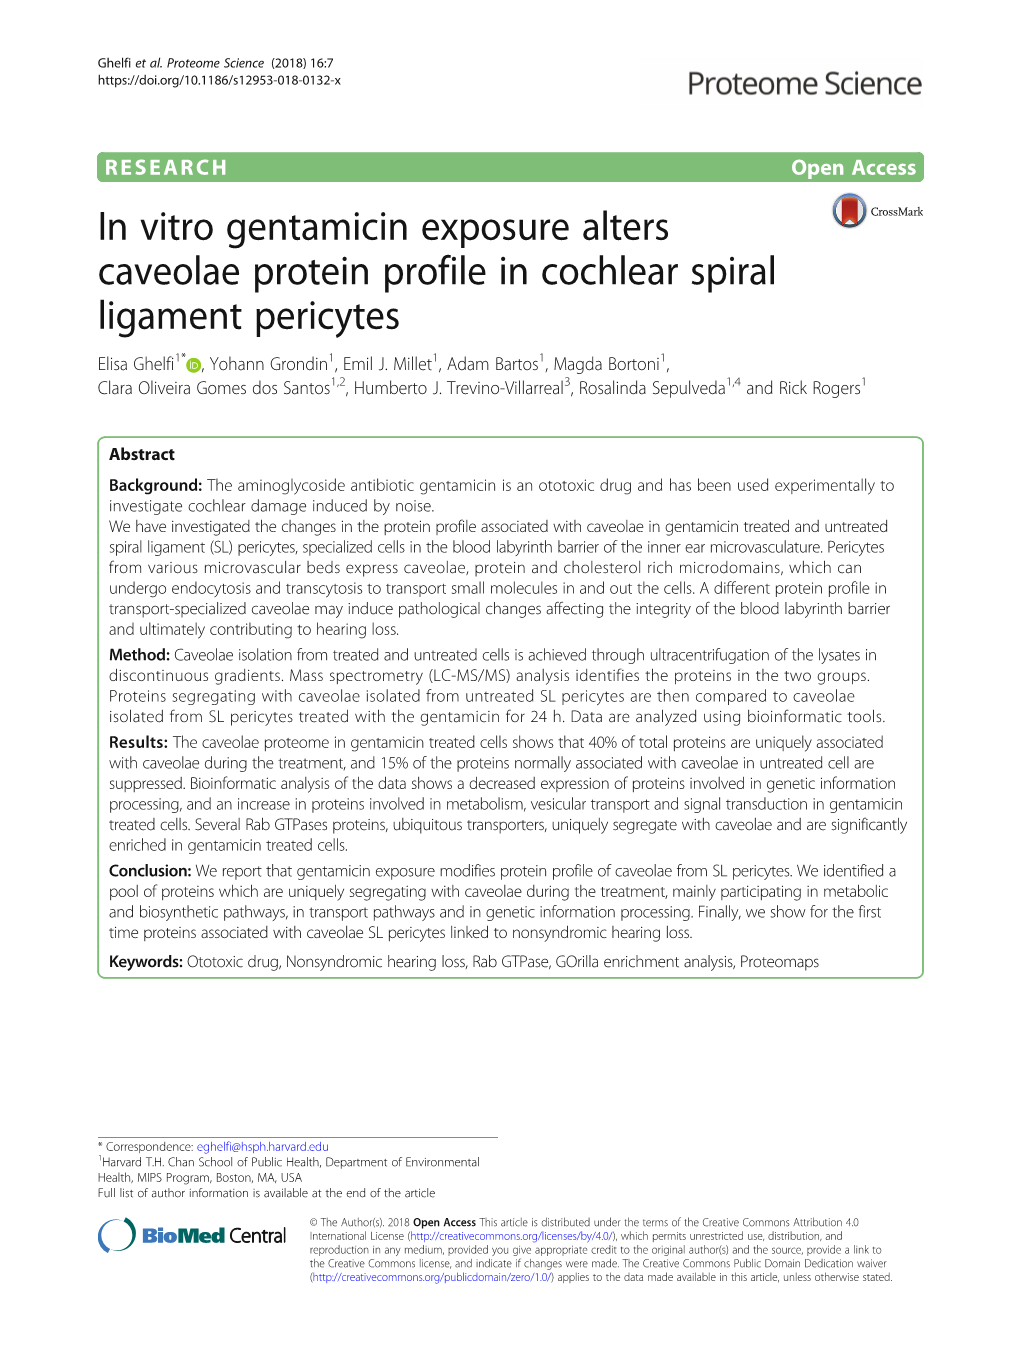 In Vitro Gentamicin Exposure Alters Caveolae Protein Profile in Cochlear Spiral Ligament Pericytes Elisa Ghelfi1* , Yohann Grondin1, Emil J